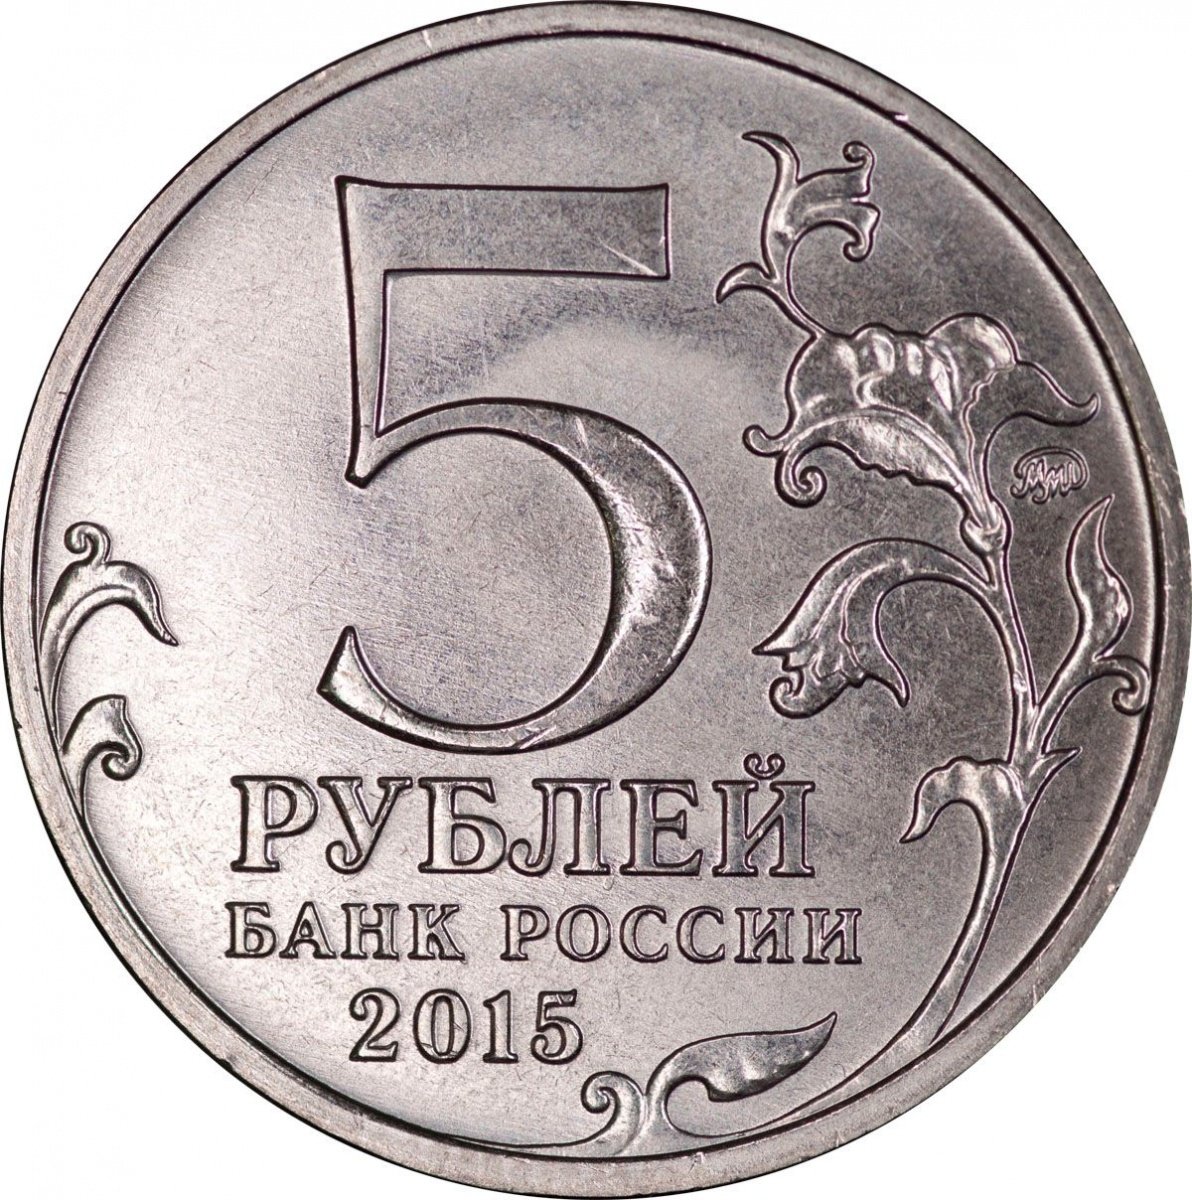 Рубль ис. Монета 5 рублей без фона. Пятирублевая монета. Монета 5 рублей 2015. Монеты 1 2 5 рублей.